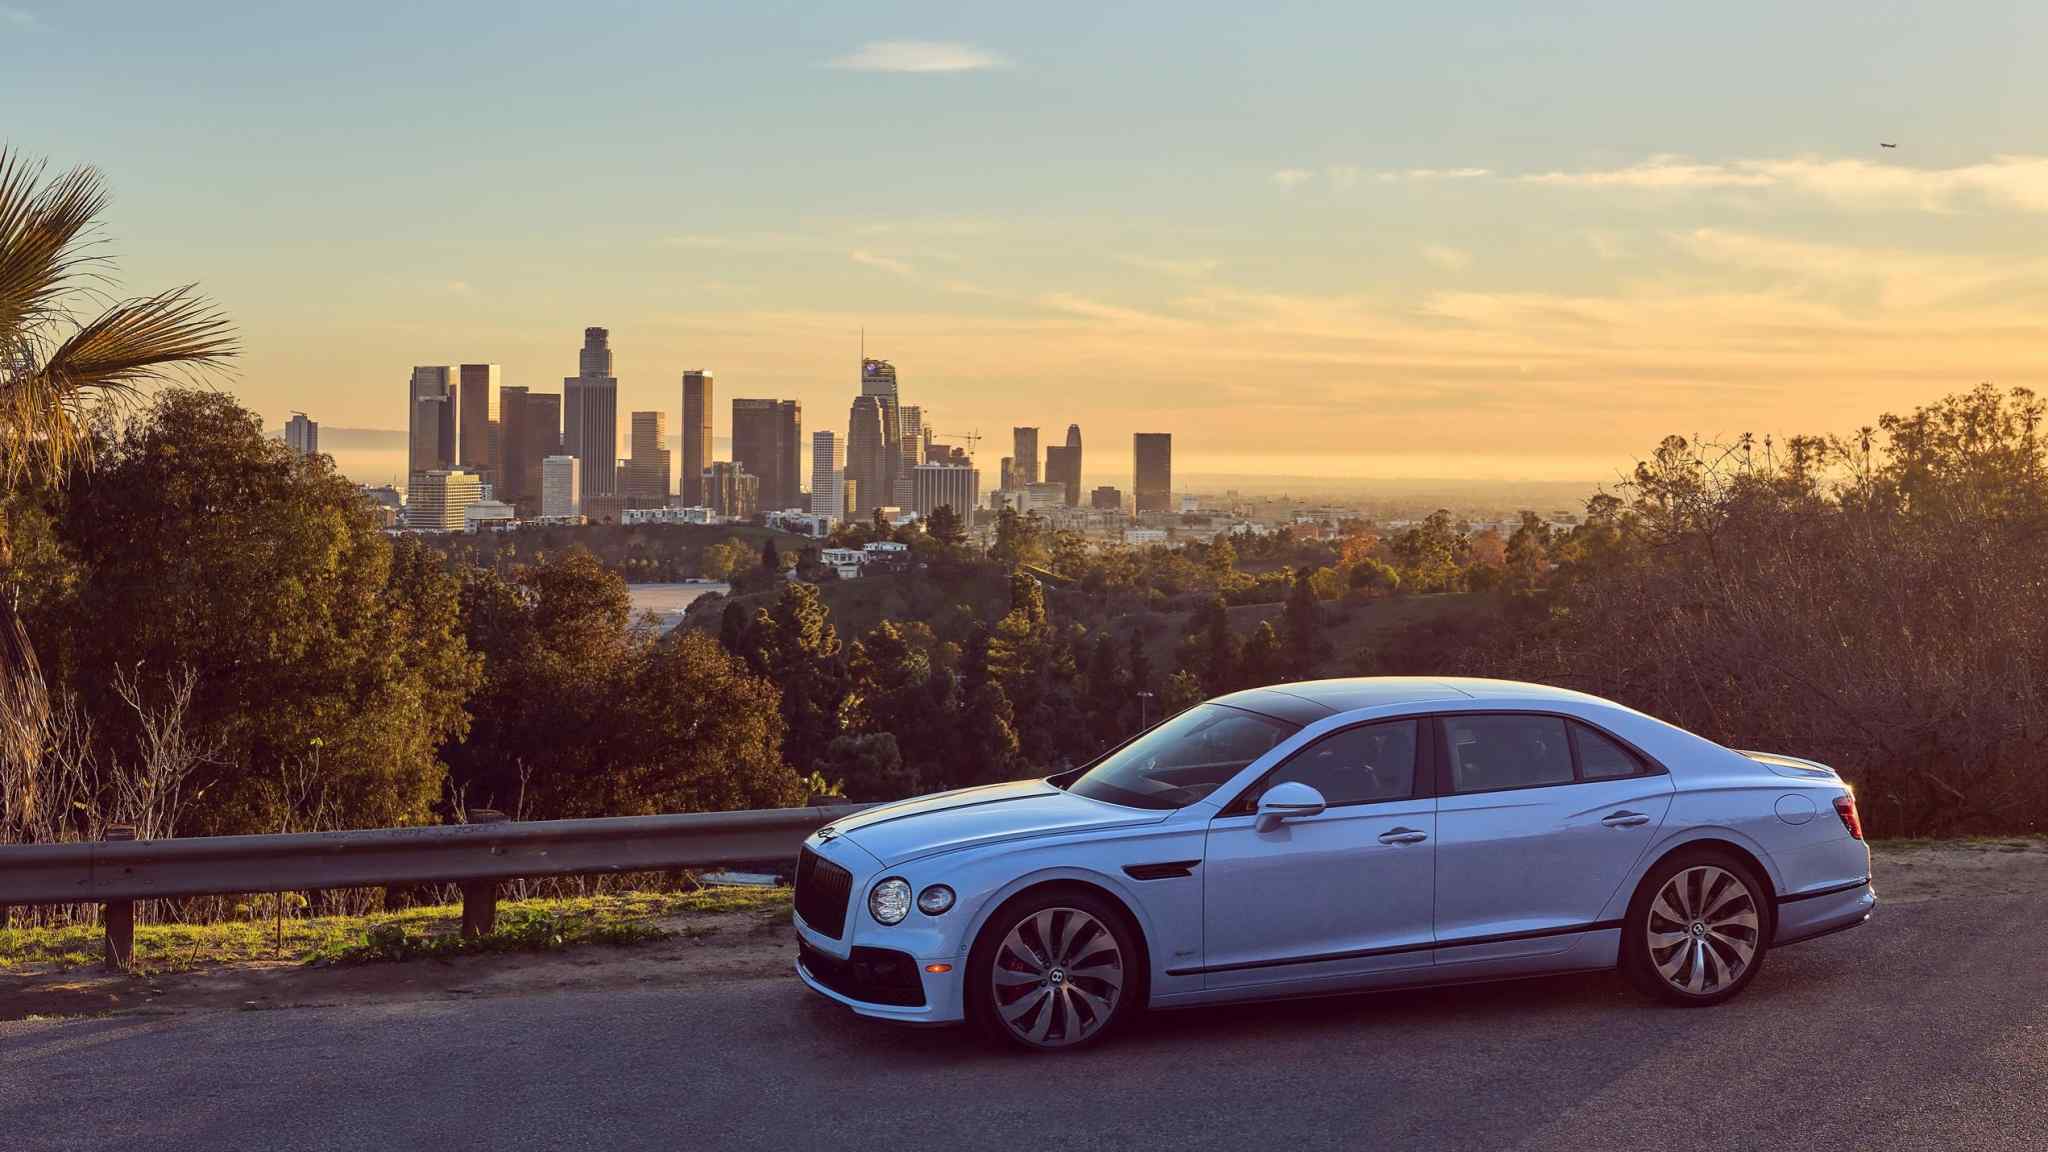 Can Bentley crack the EV market?